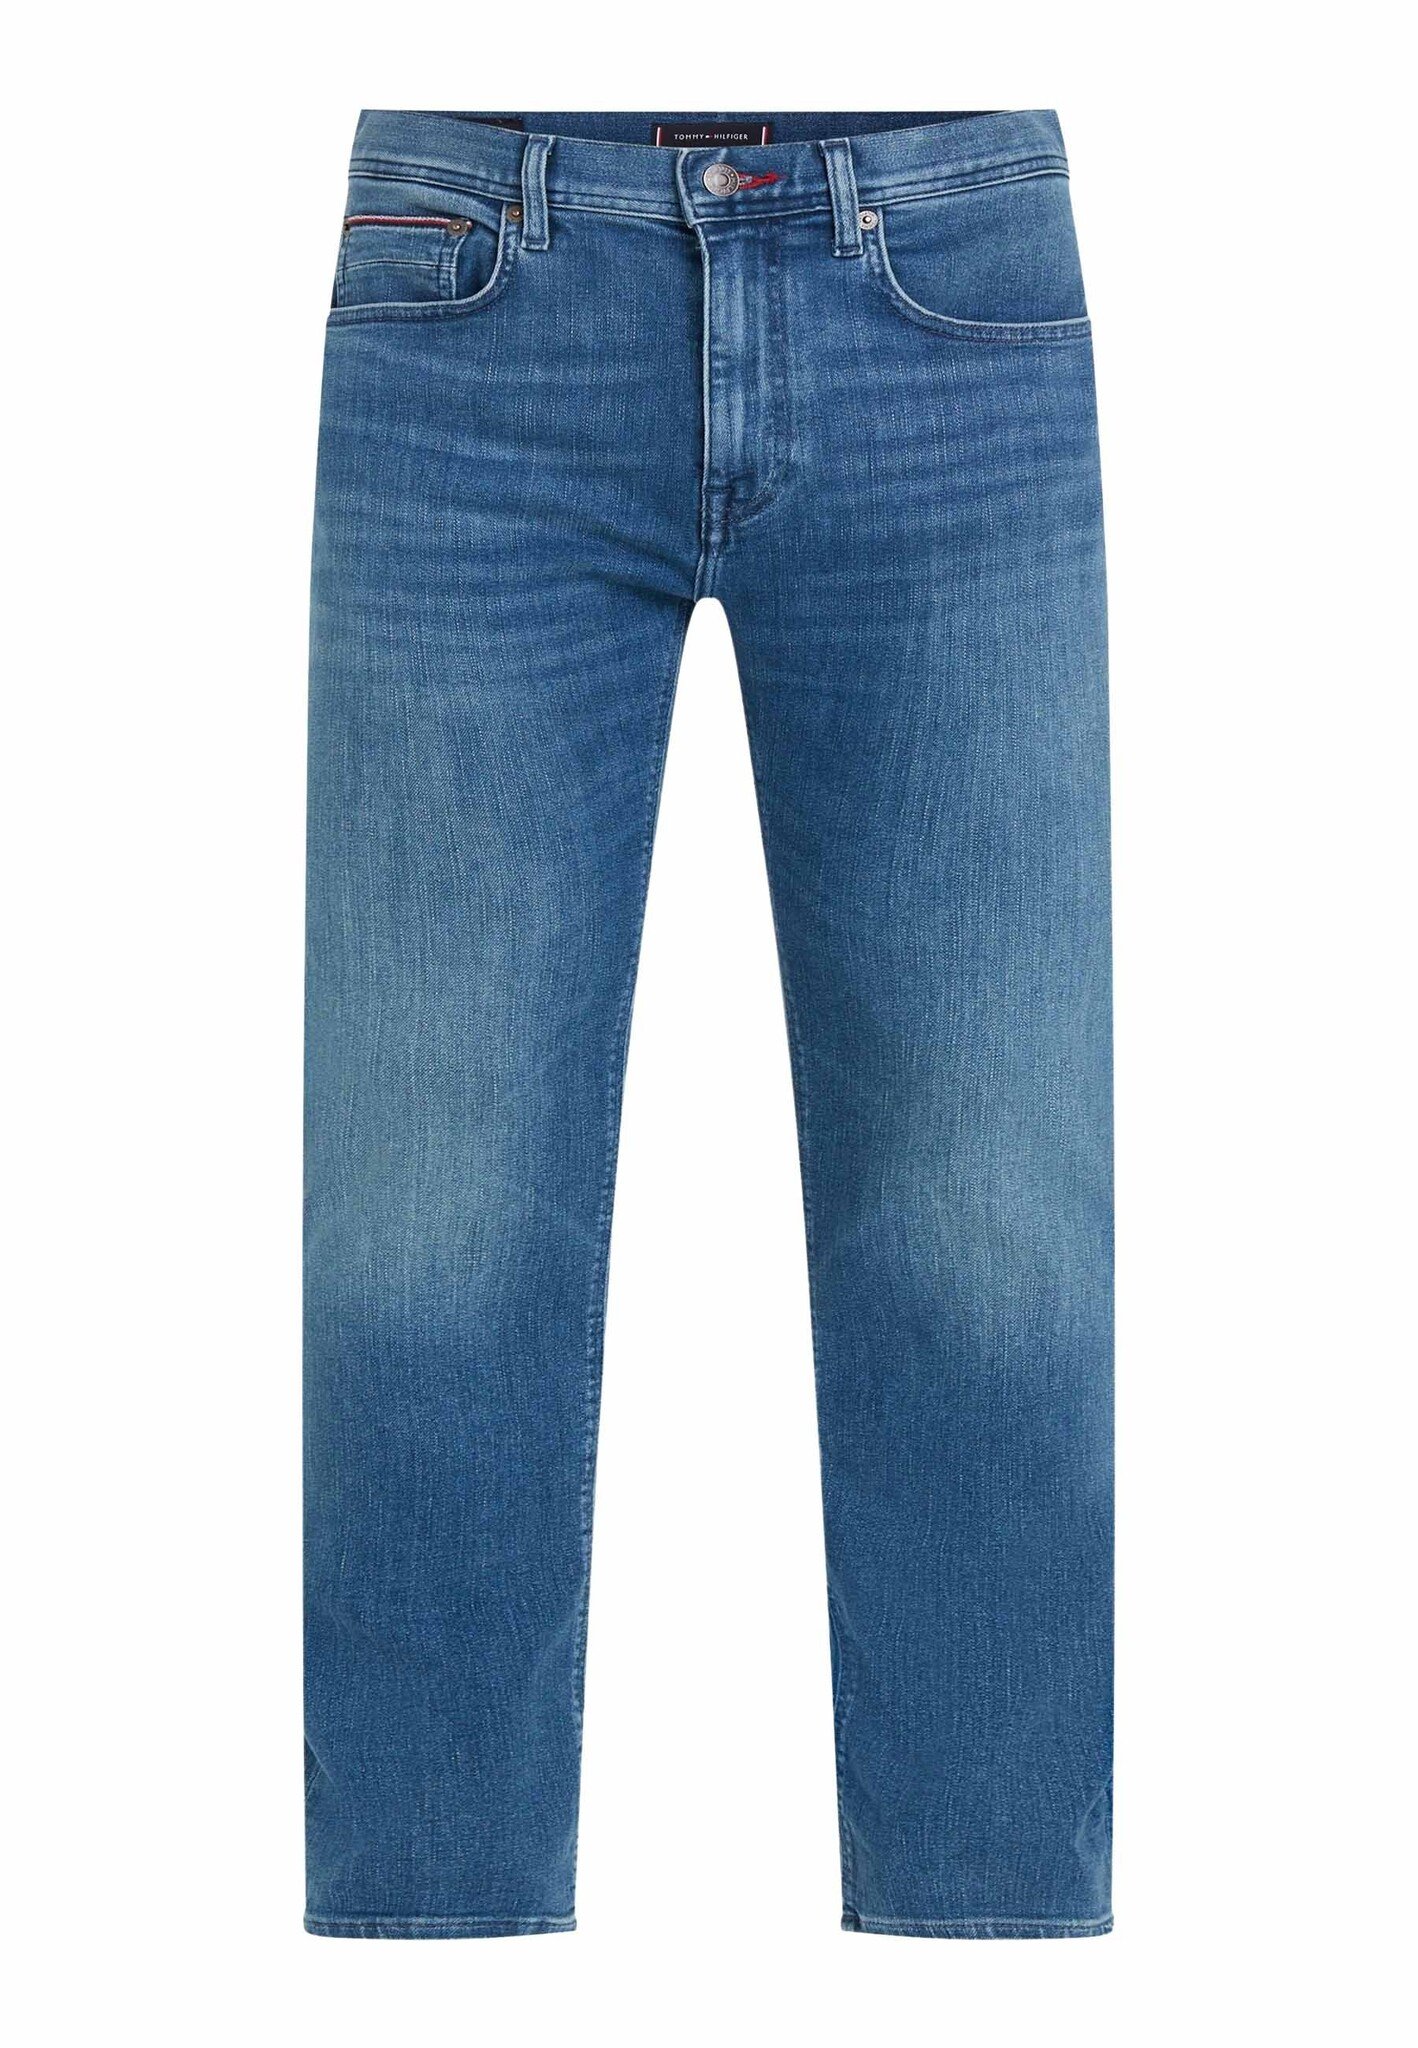 Tommy Hilfiger jeans blauw Heren maat 31/32